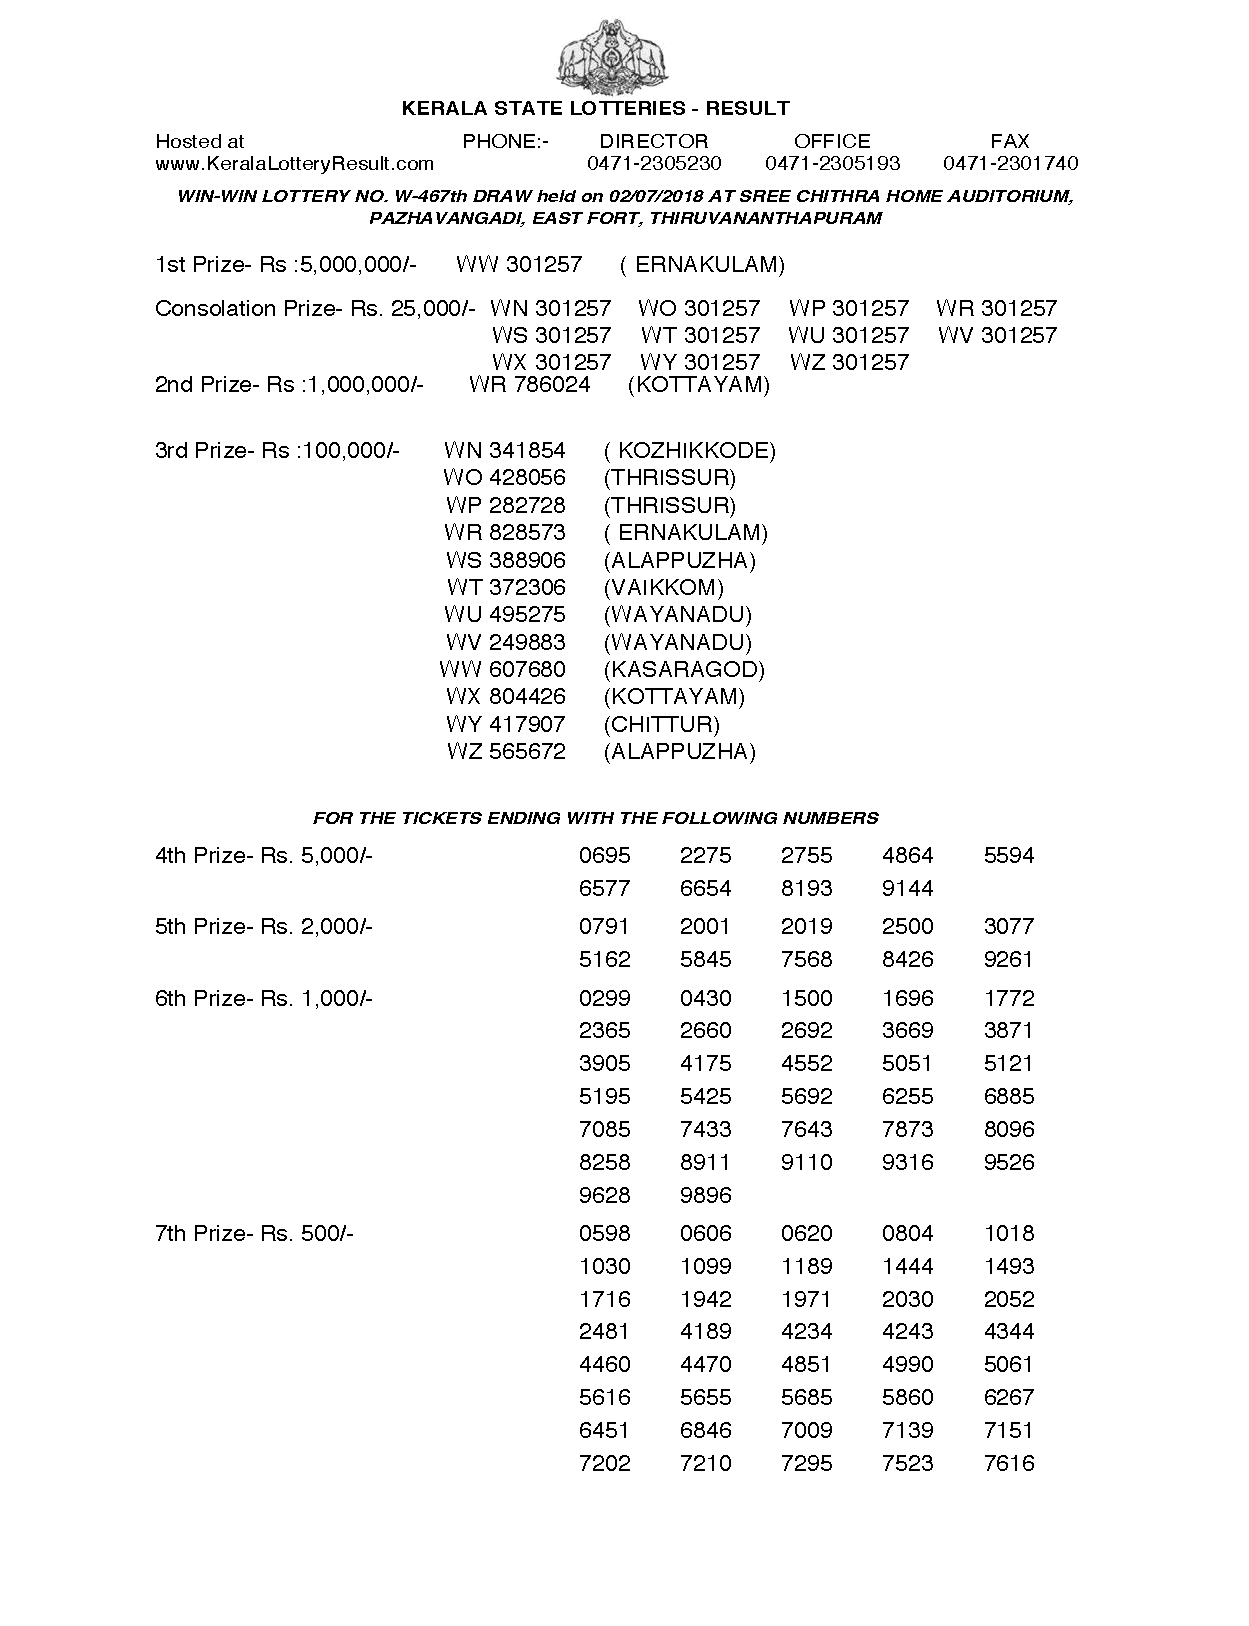 Winwin W467 Kerala Lottery Results Screenshot: Page 1